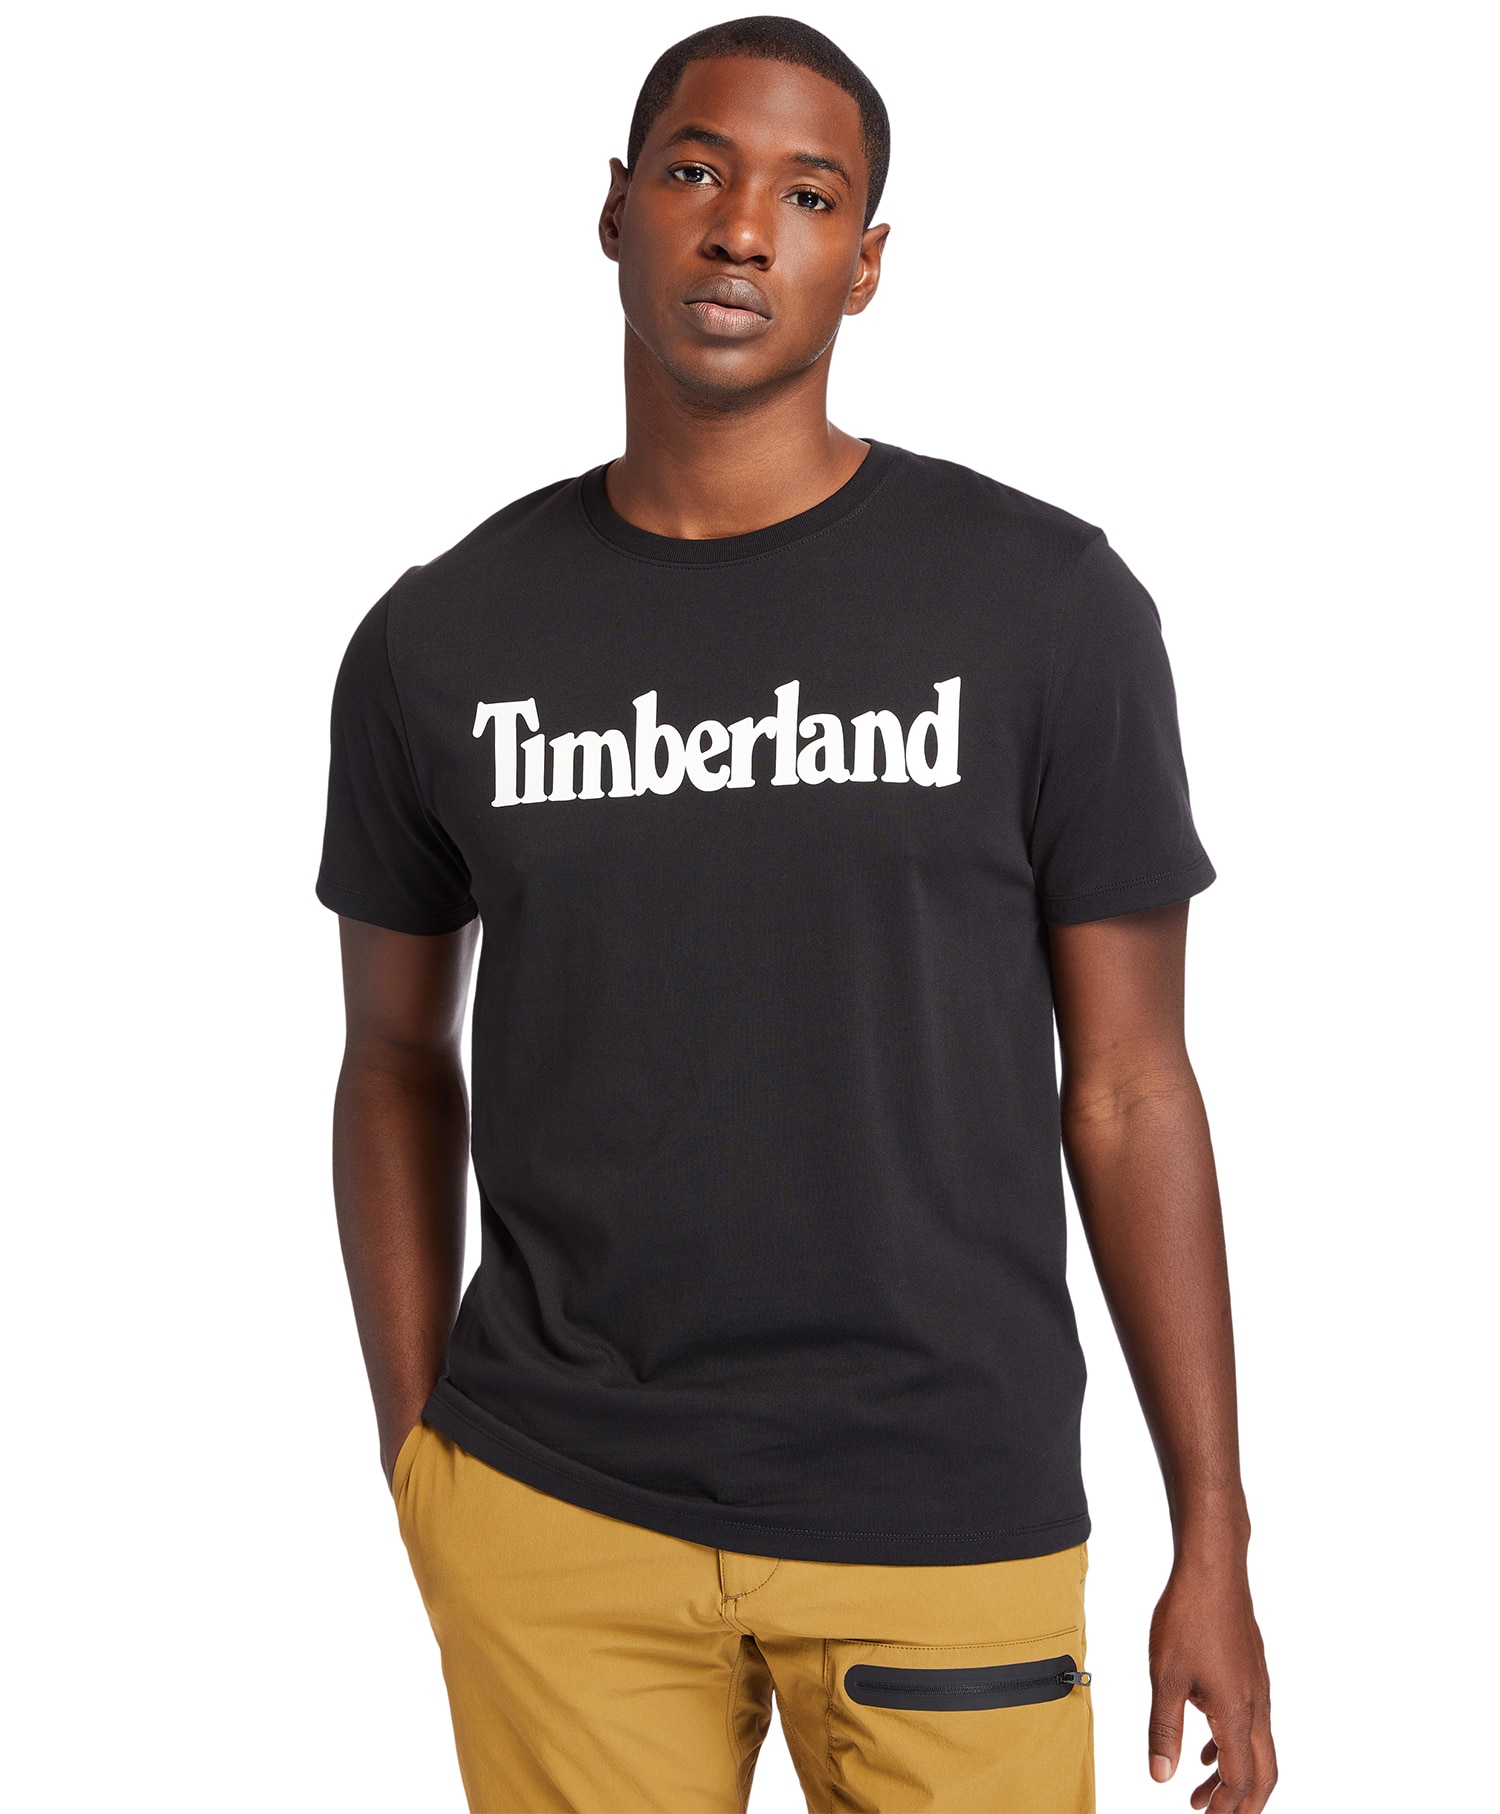 Timberland logo tee